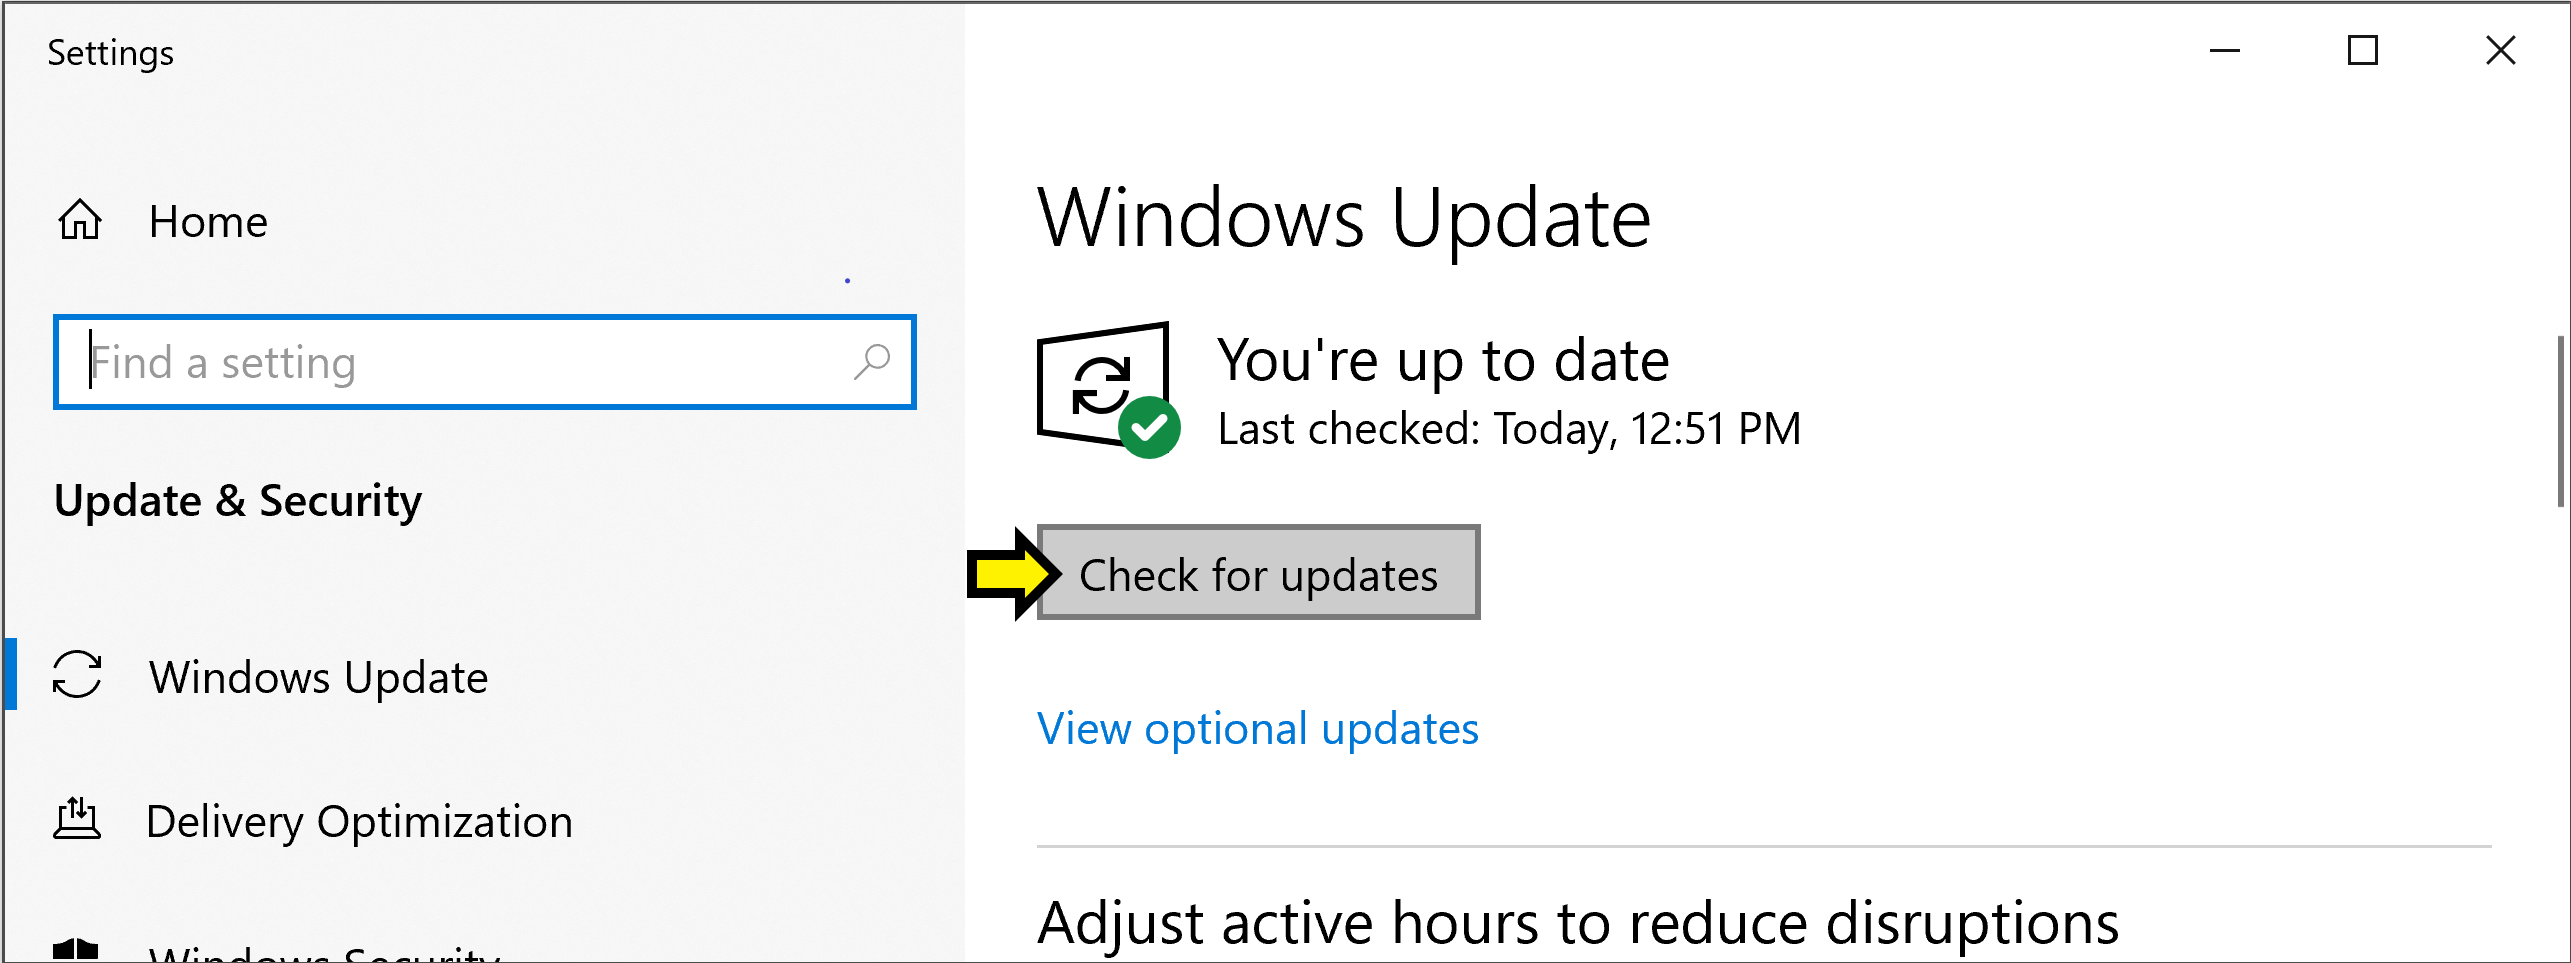 Available updates screenshot - Windows